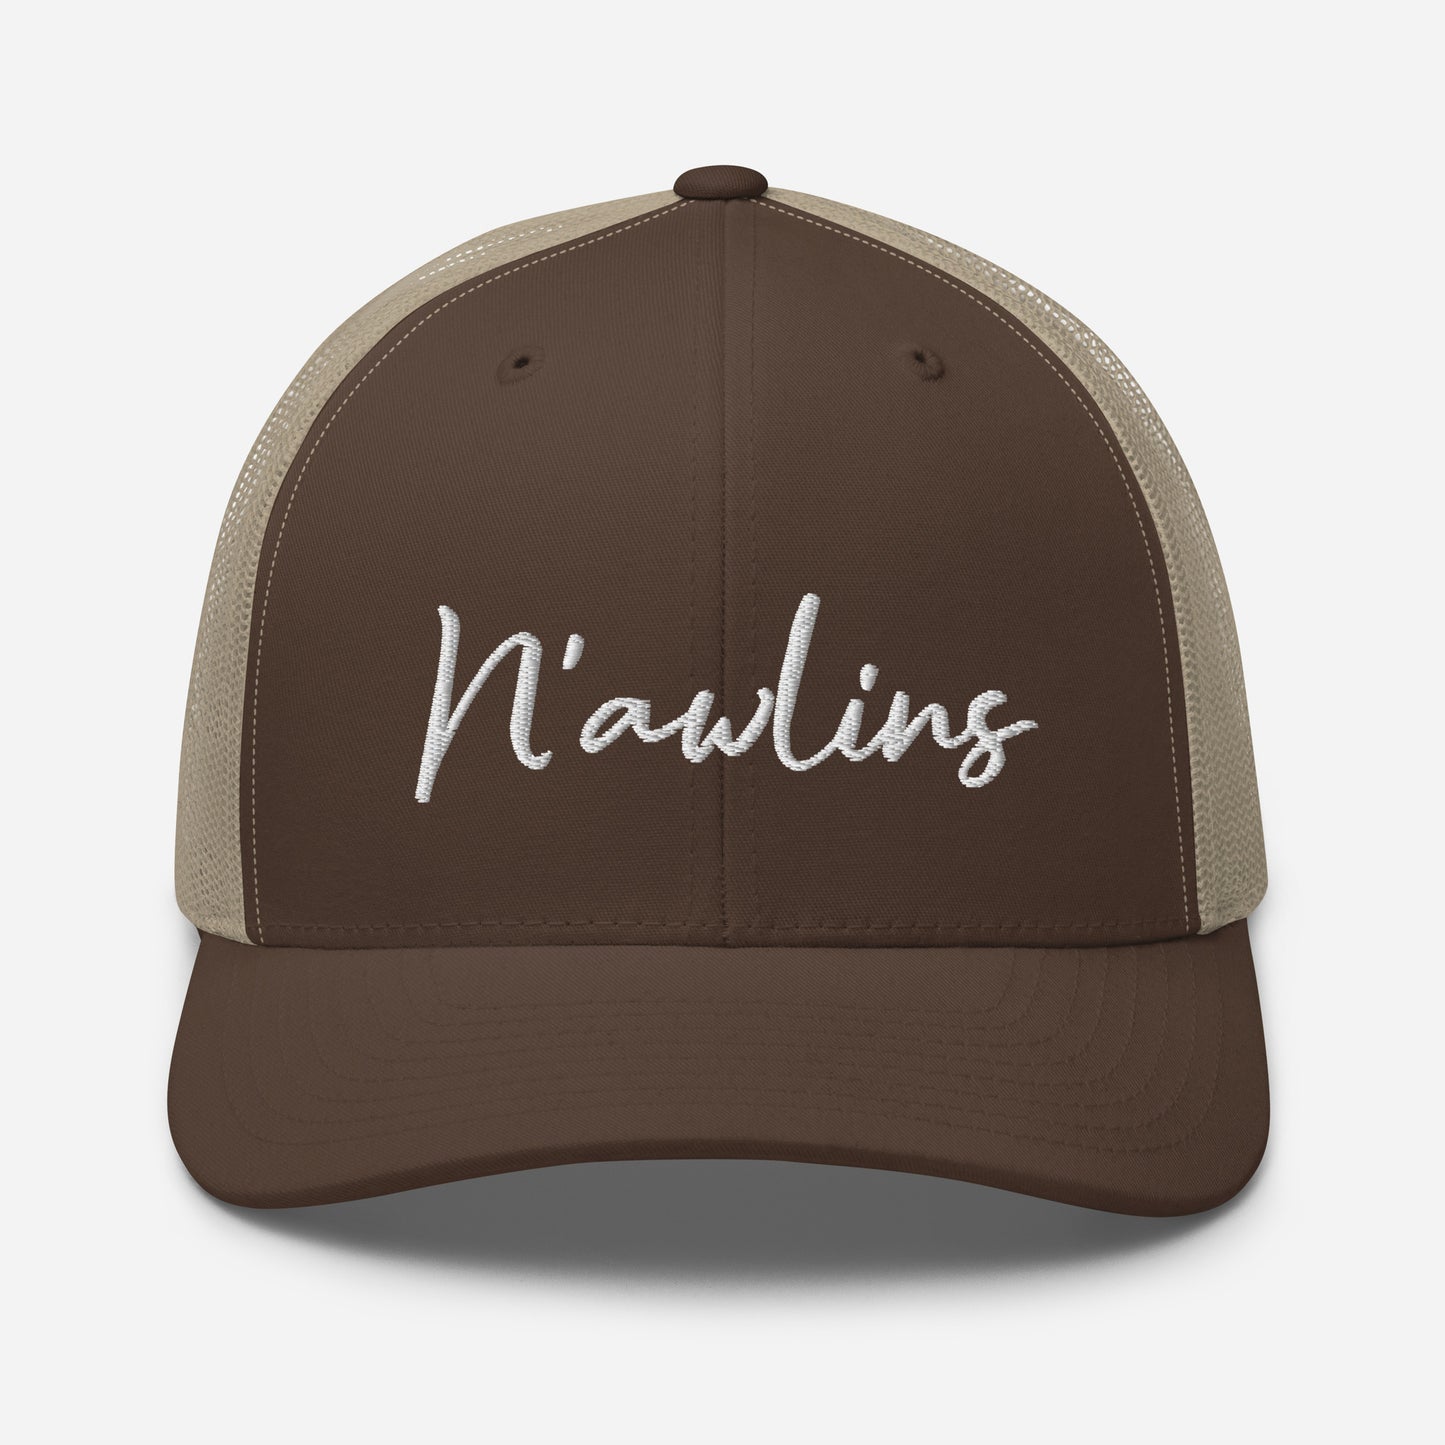 Nawlins Trucker Cap